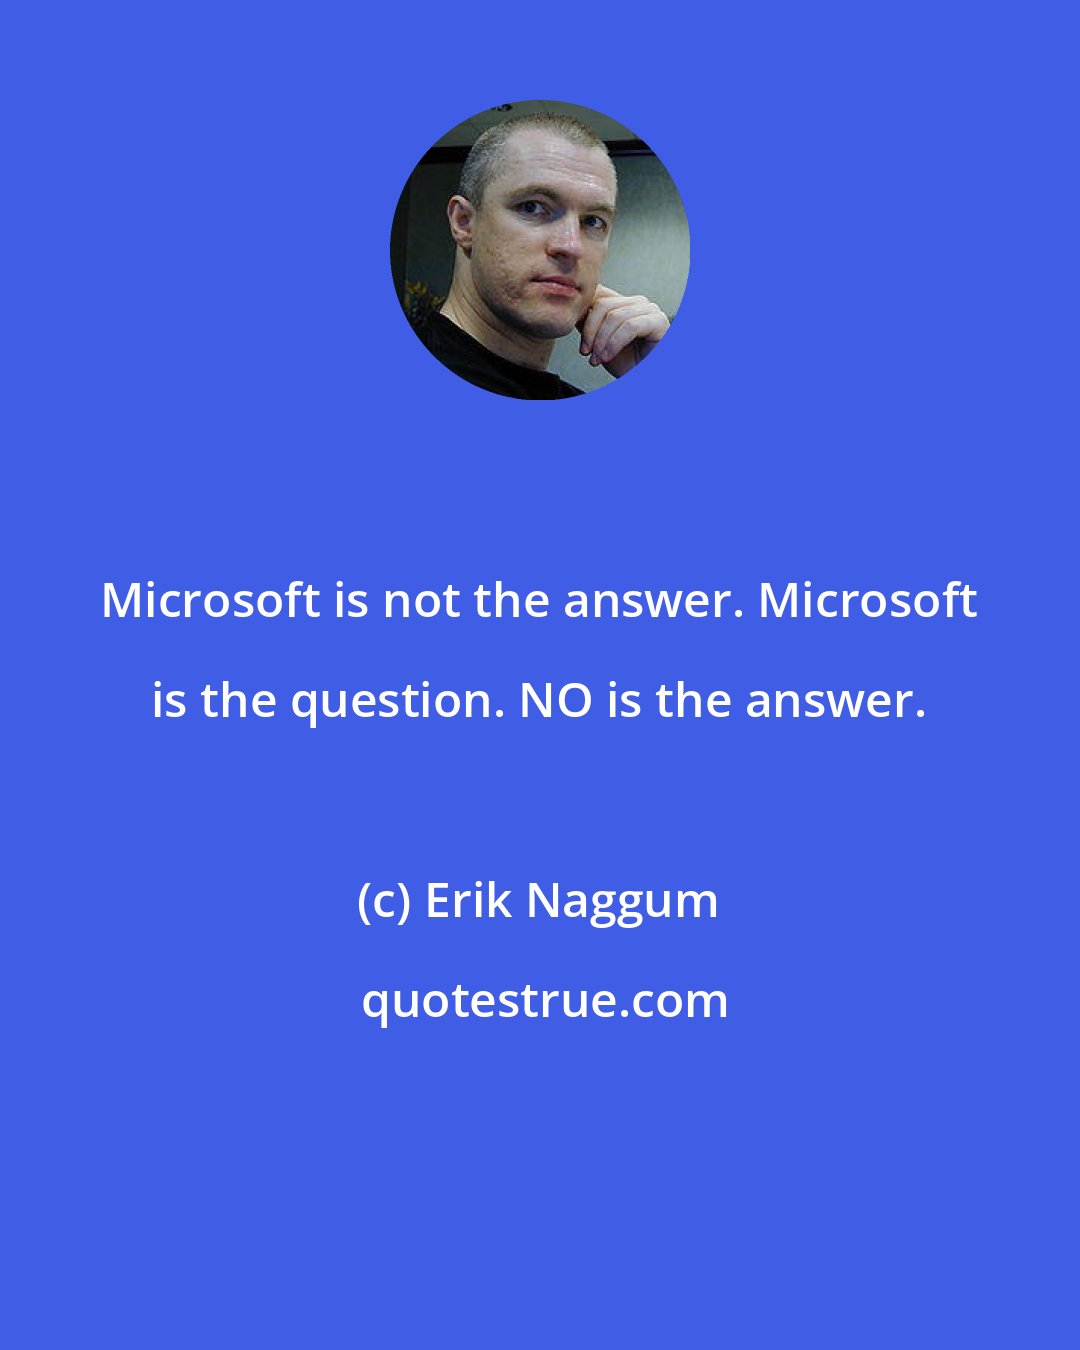 Erik Naggum: Microsoft is not the answer. Microsoft is the question. NO is the answer.